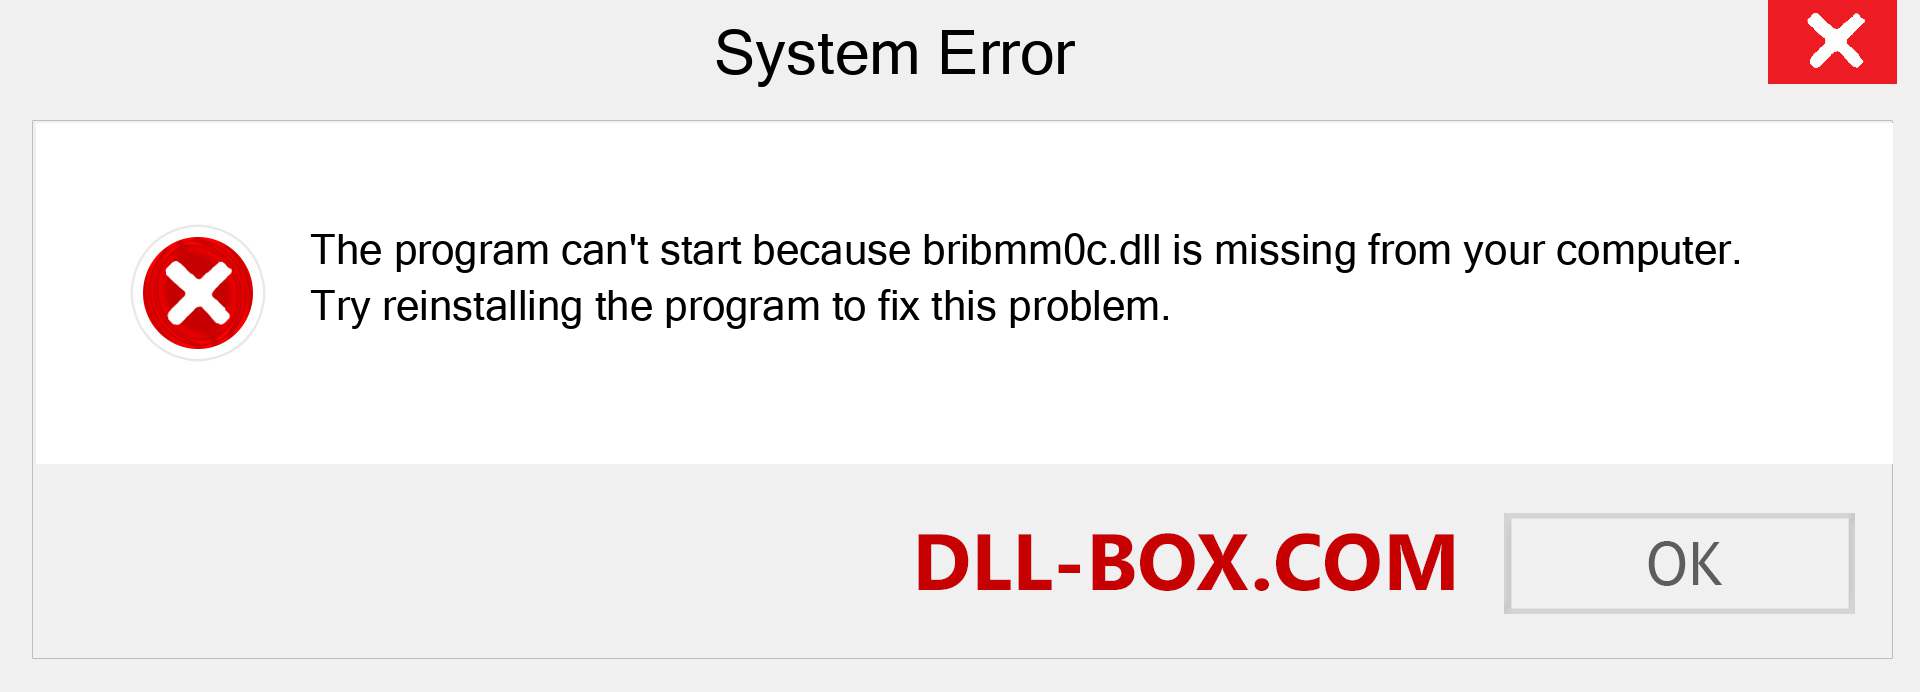  bribmm0c.dll file is missing?. Download for Windows 7, 8, 10 - Fix  bribmm0c dll Missing Error on Windows, photos, images